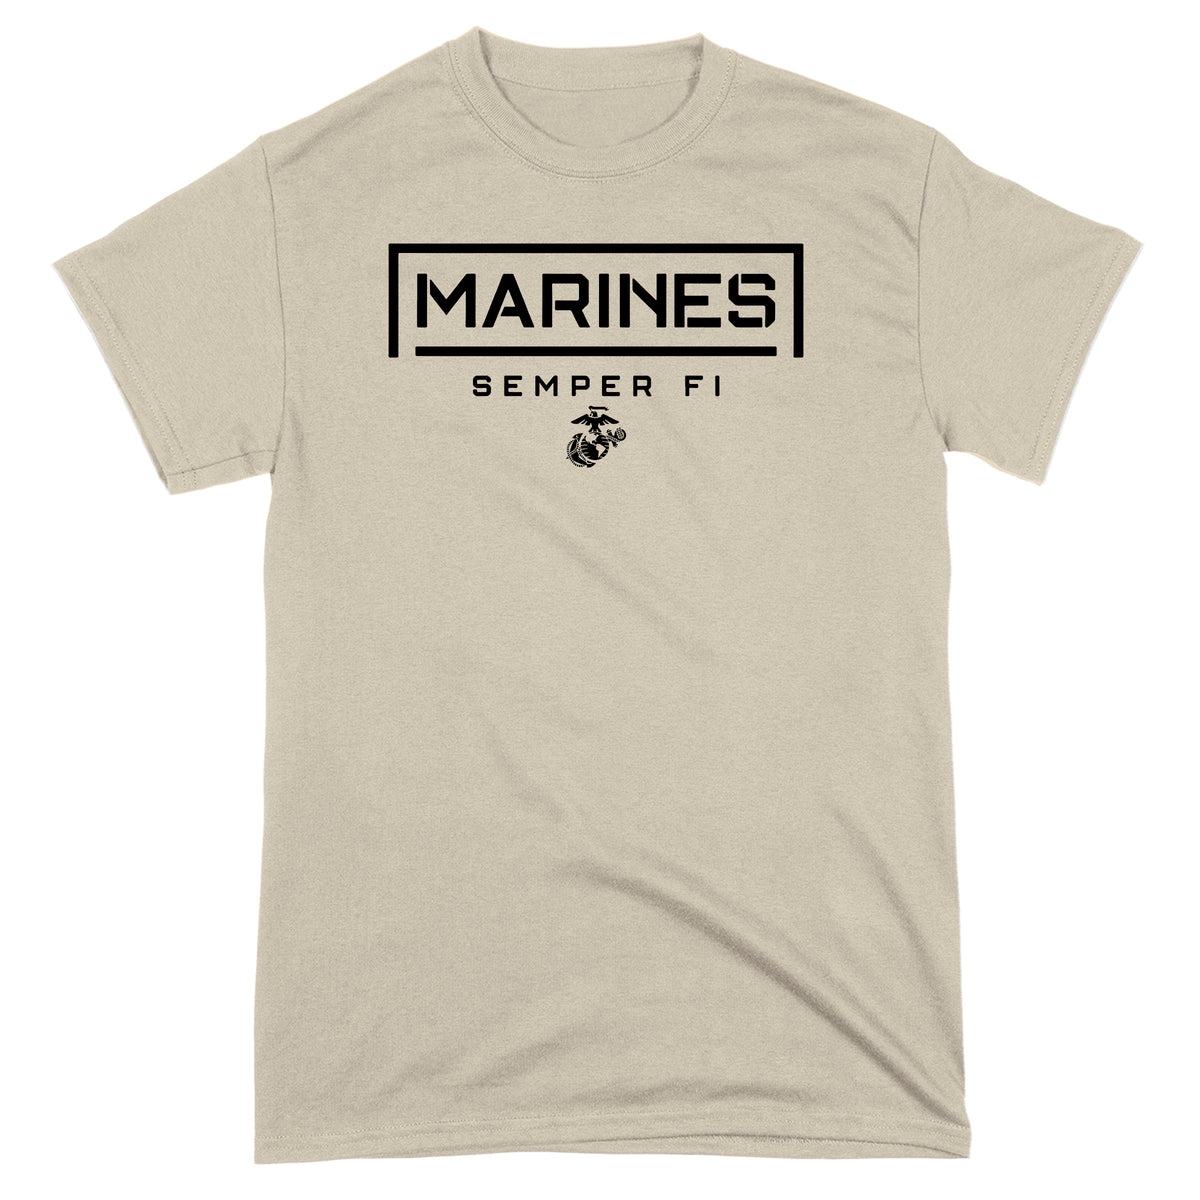 Marines "THE OUTPOST" Desert Sand Tee